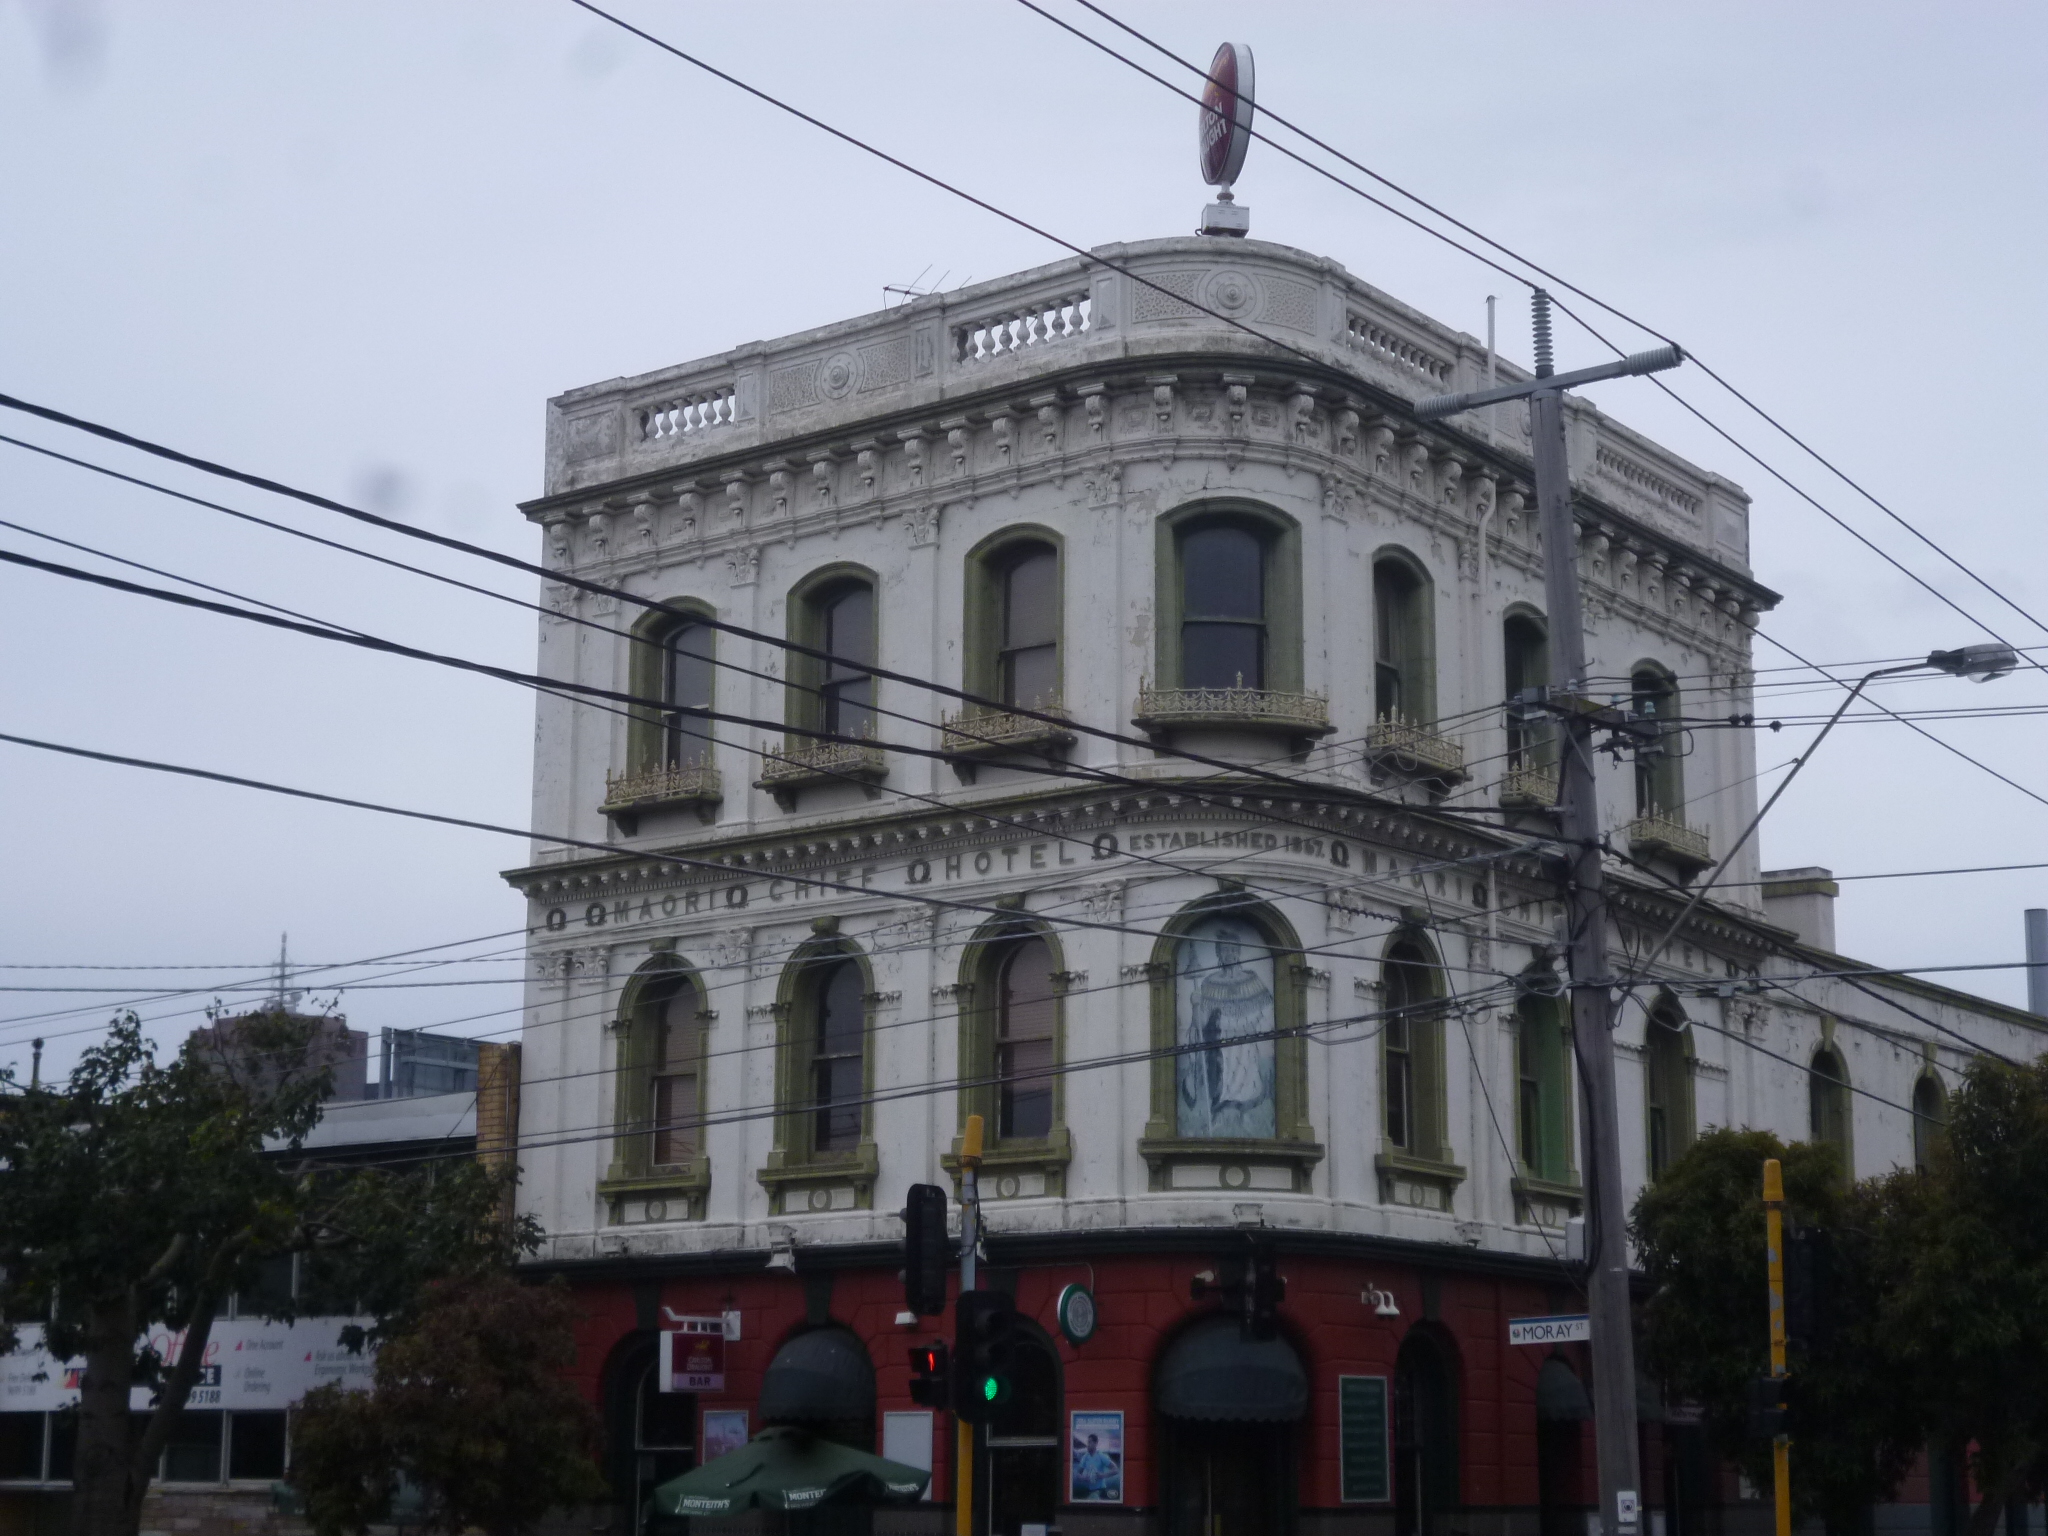 Maori Chief Hotel - Accommodation Sydney